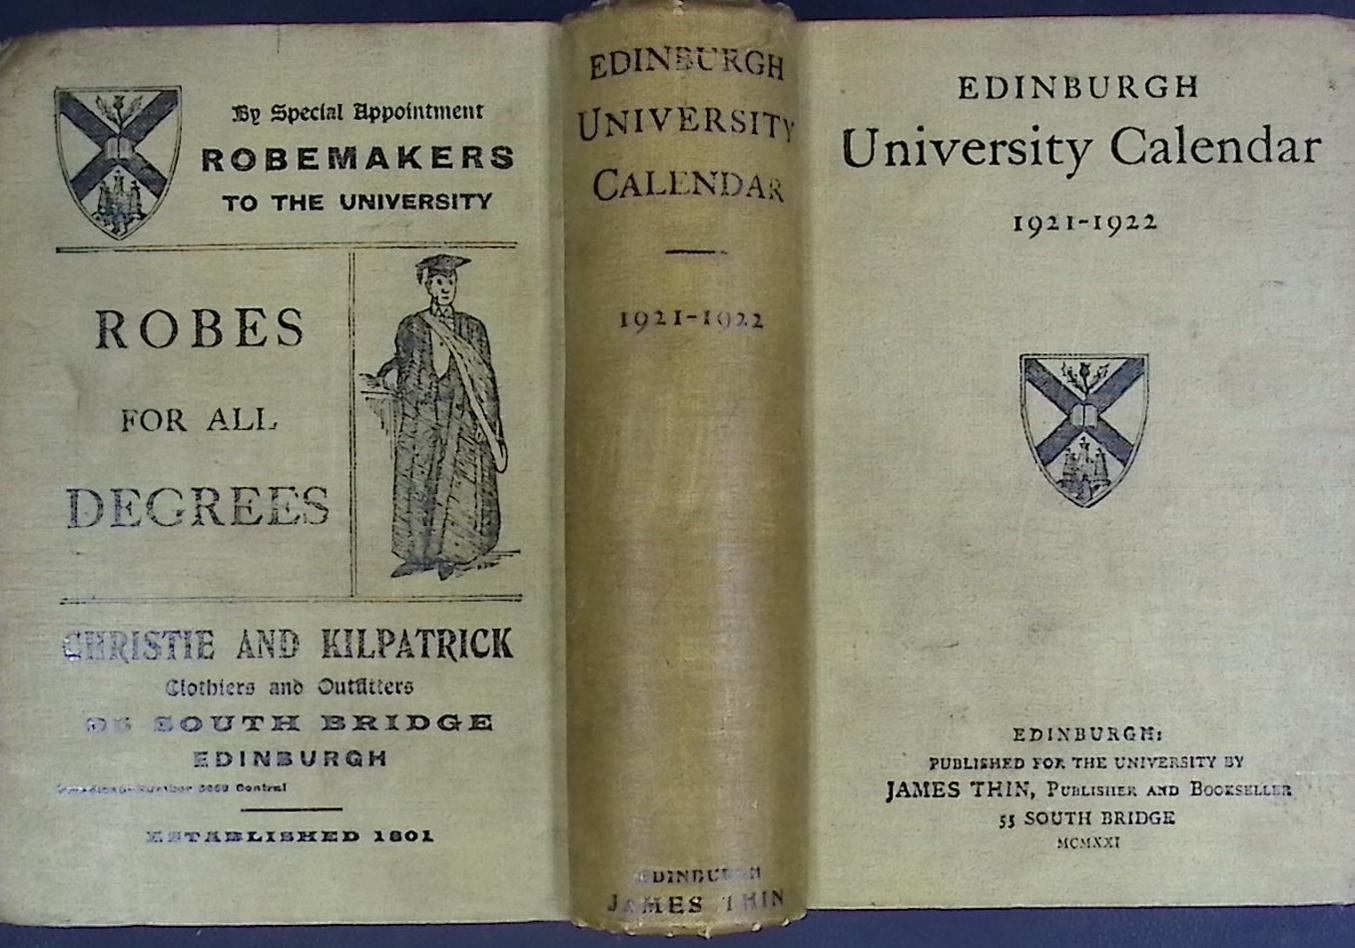 The Edinburgh University Calendar. 1921-1922.